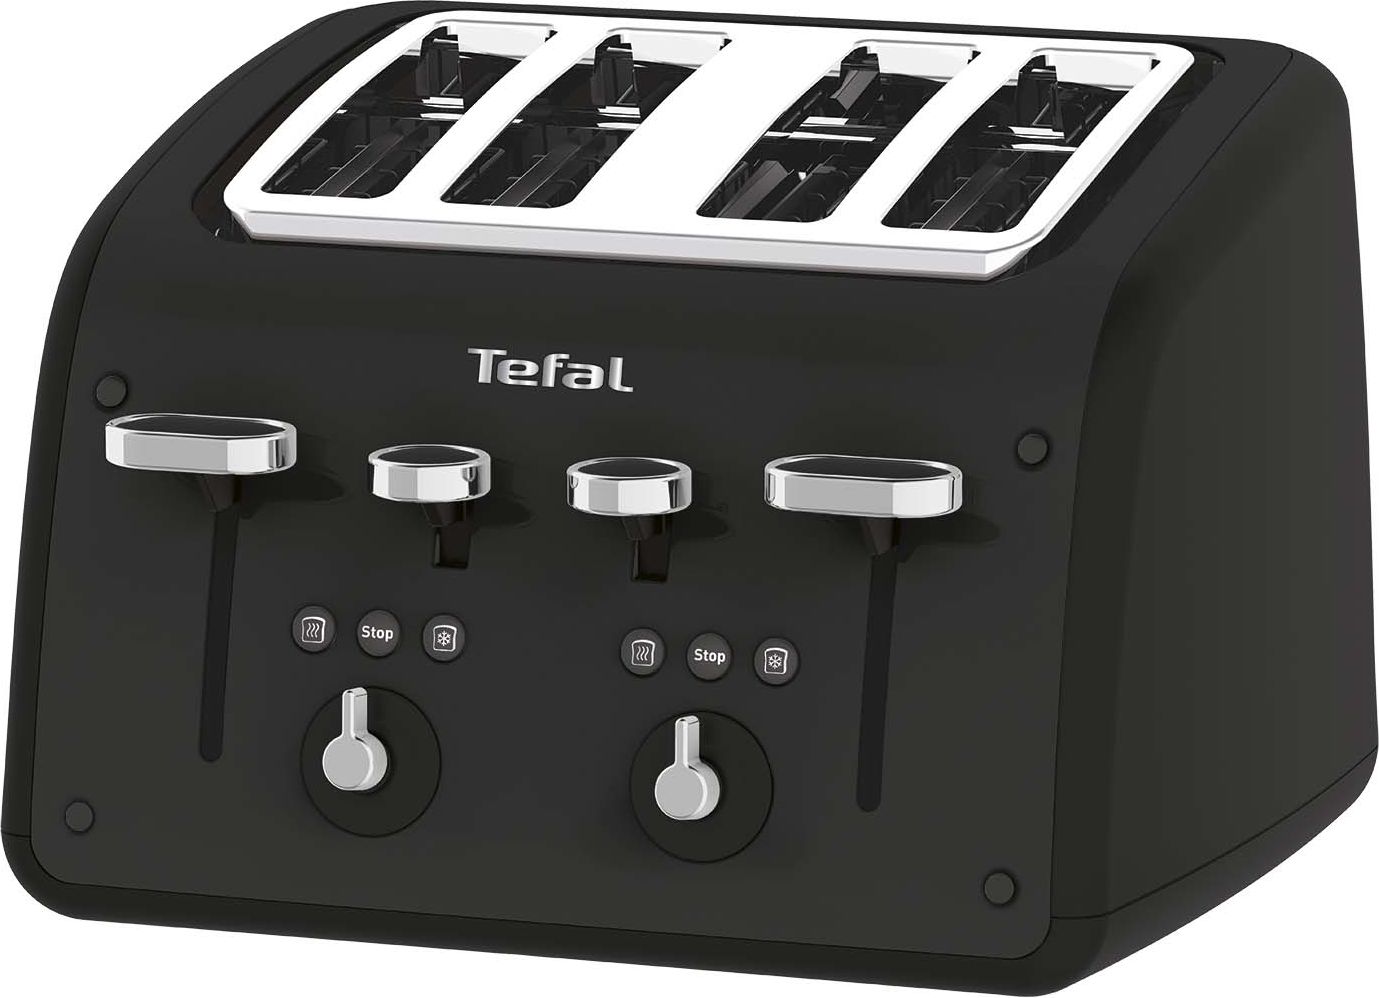 Tefal Retra TF700N40 4 Slice Toaster - Black, Black